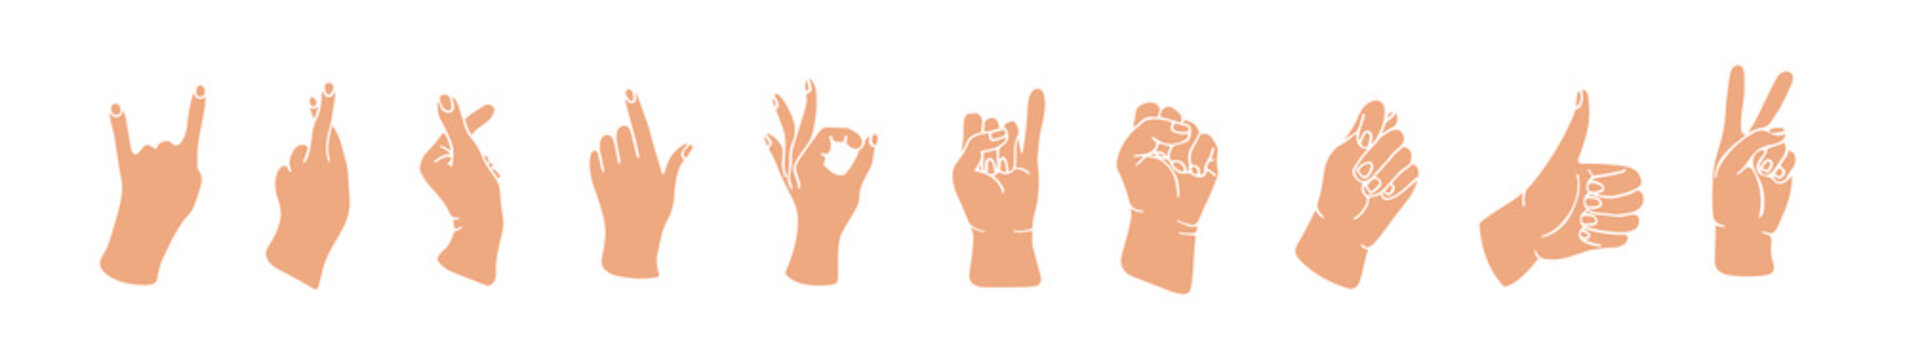 Gesture set. Cartoon hands. Illustration of hands showing different gestures. Hand drawn. Doodle hands. Vector clipart.